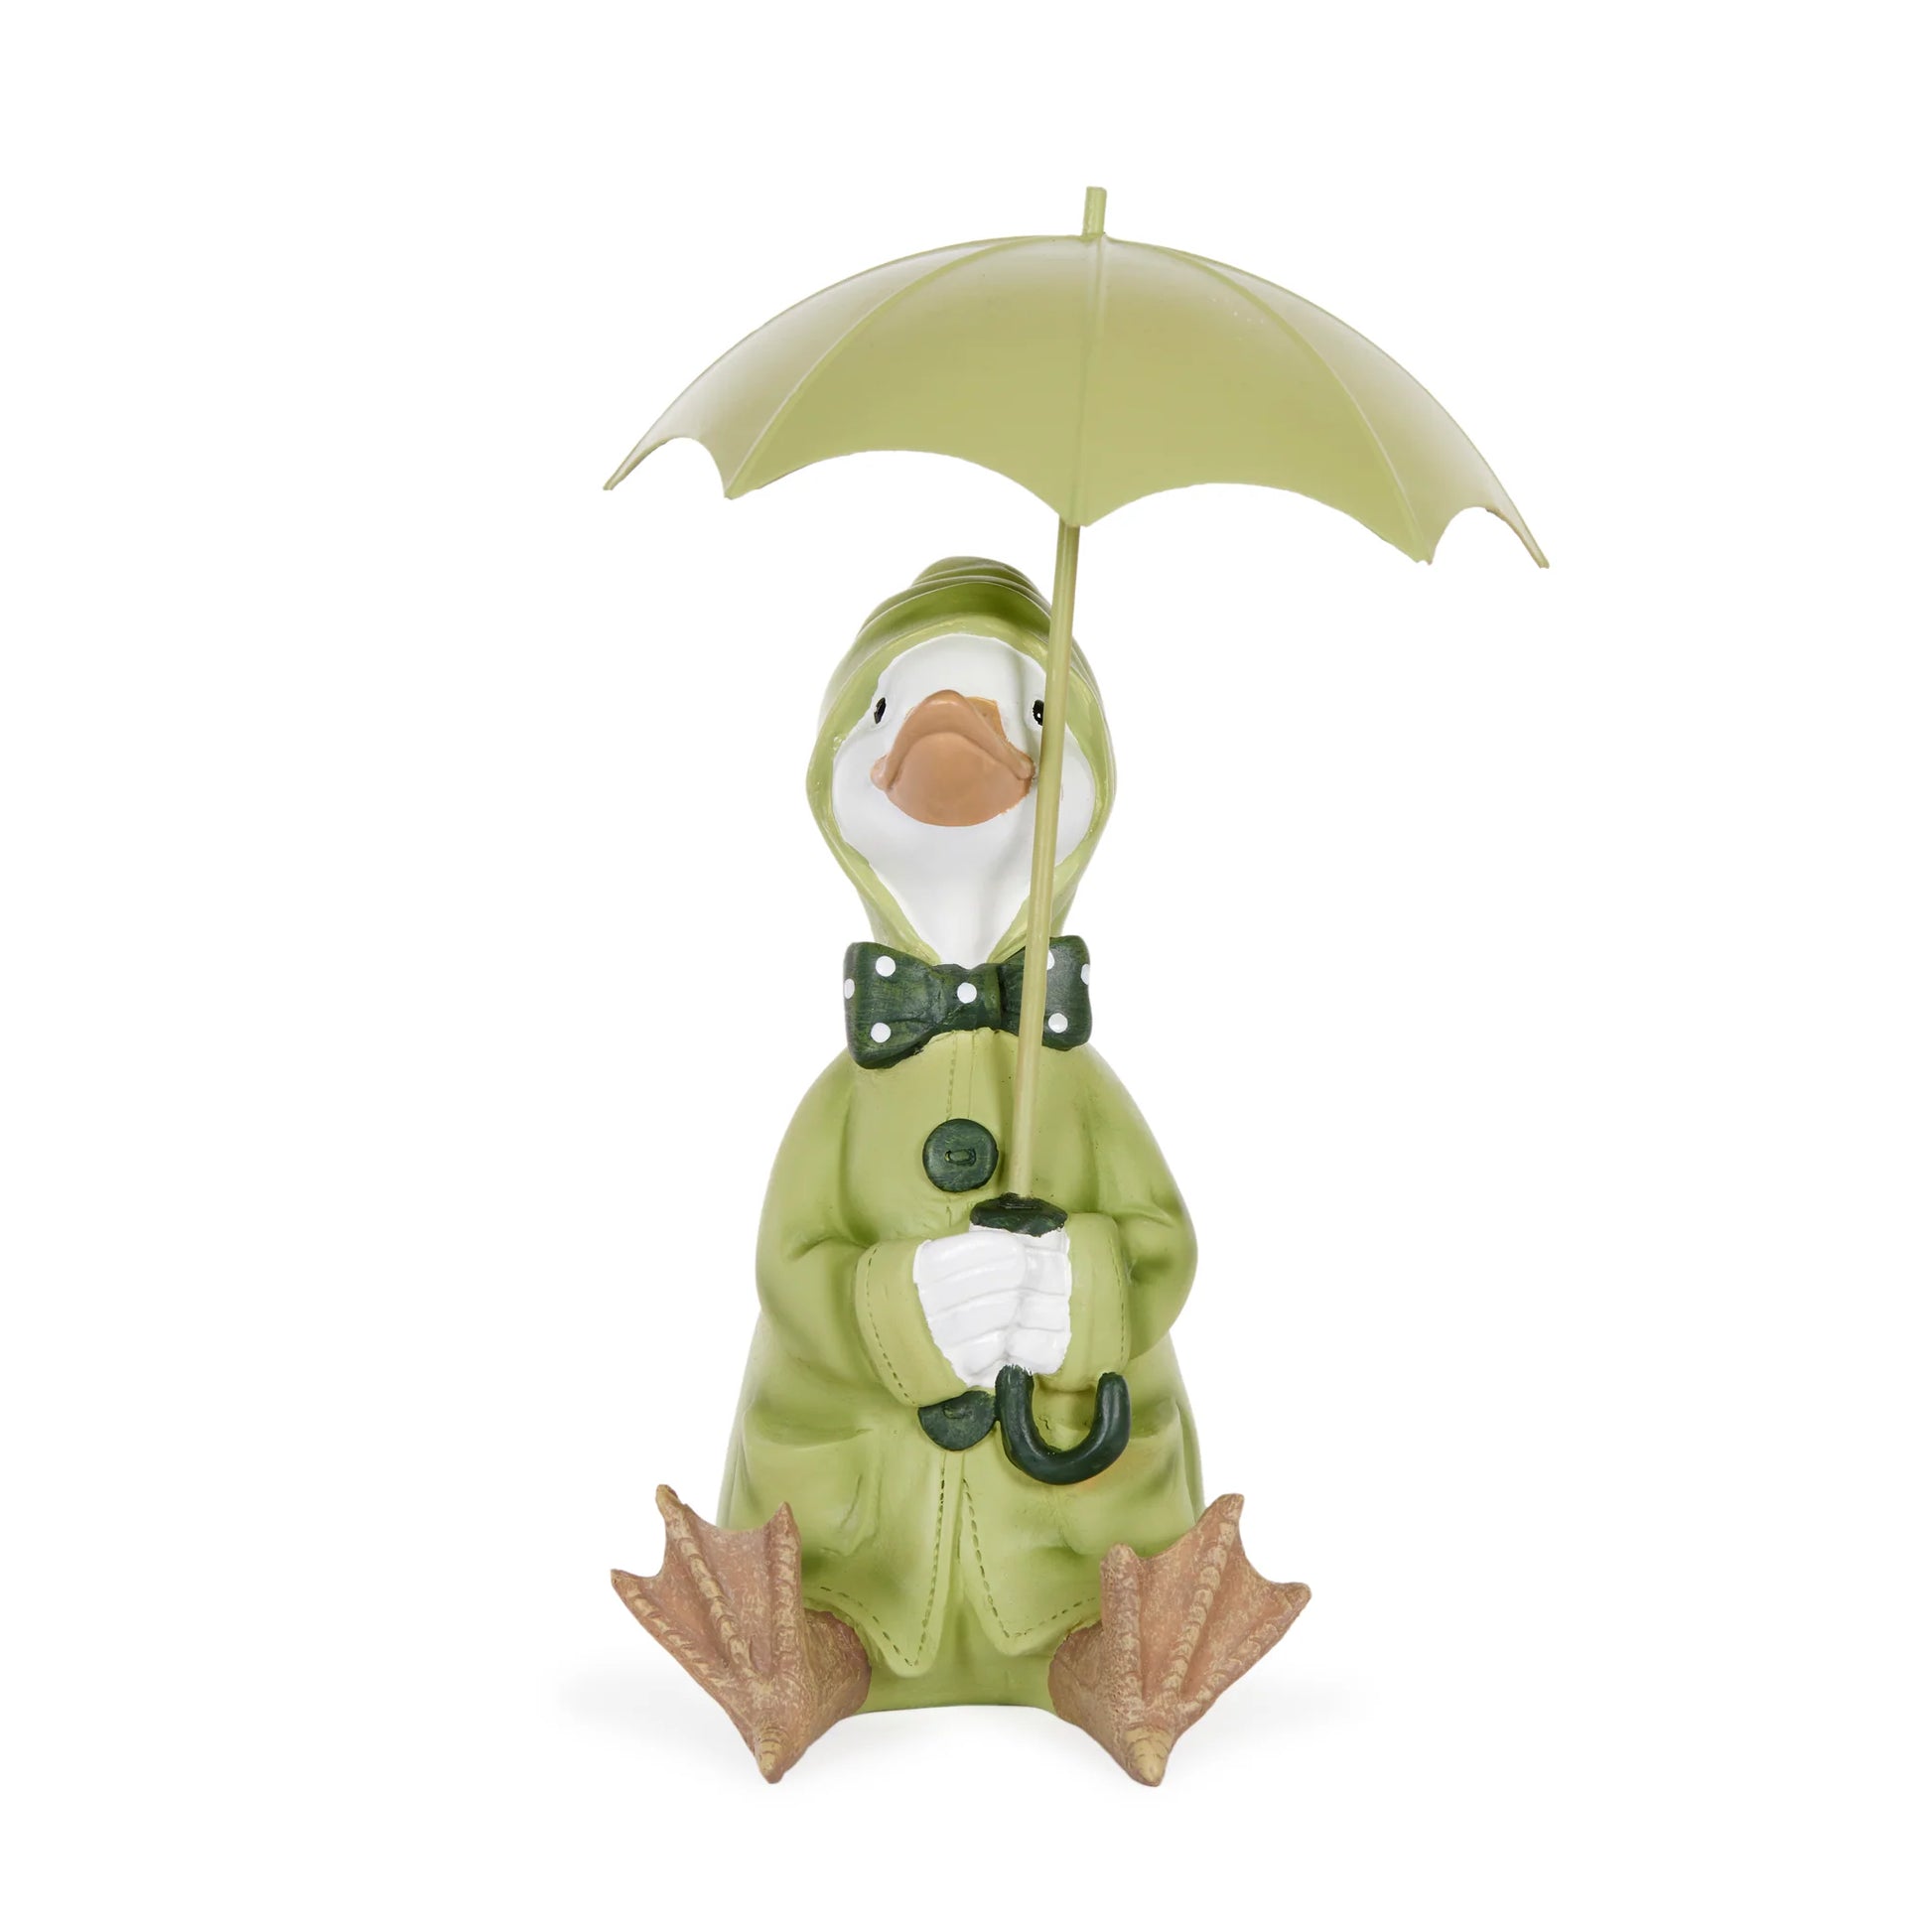 Rainy Duck Sitting with Umbrella